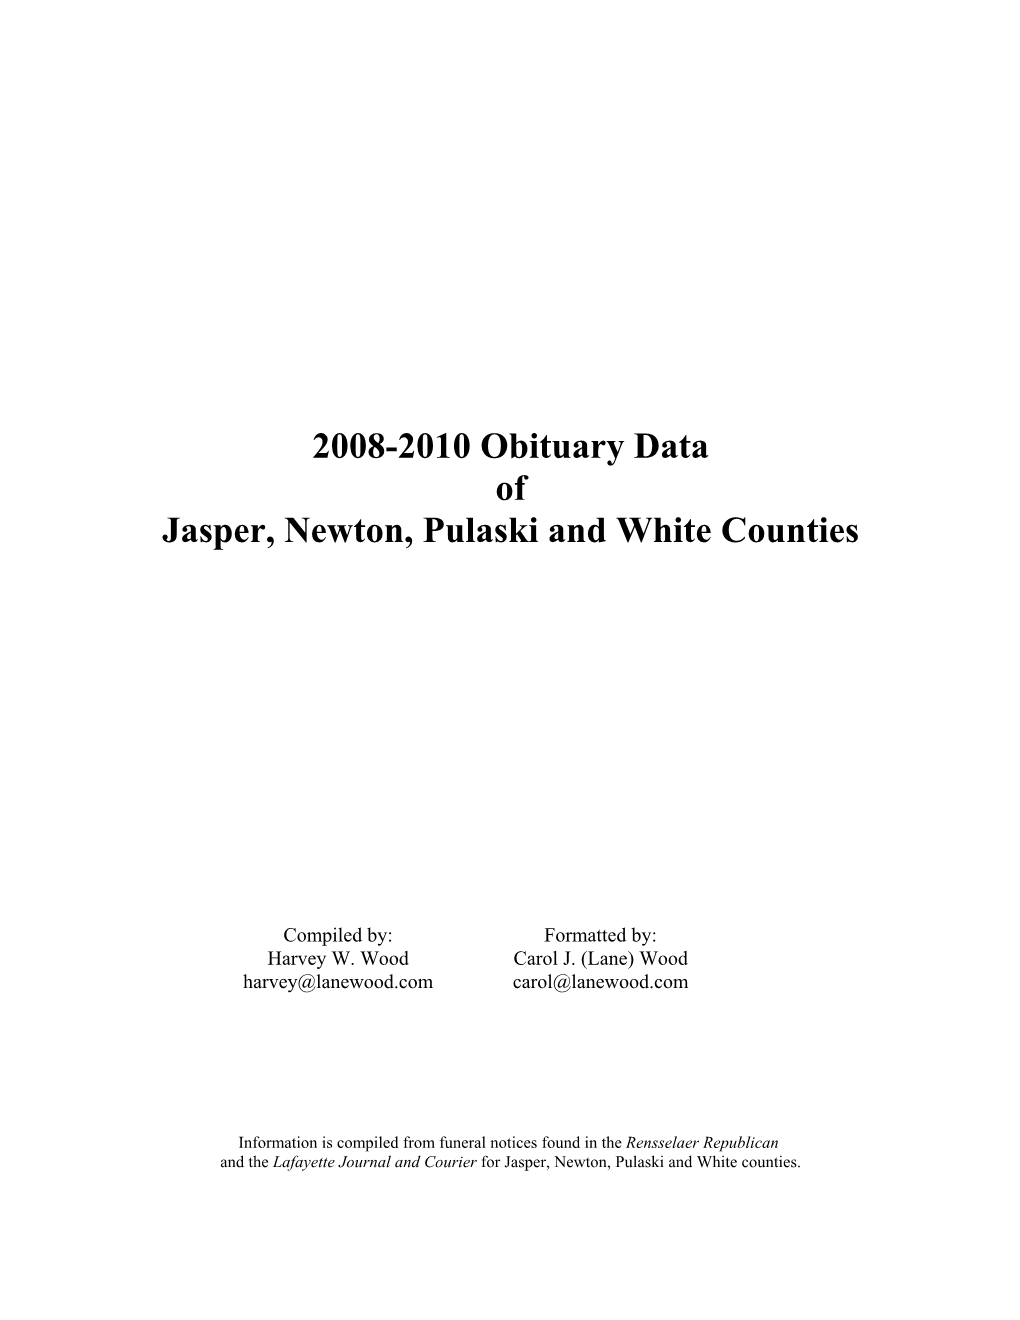 2008-2010 Obituary Data of Jasper, Newton, Pulaski and White Counties